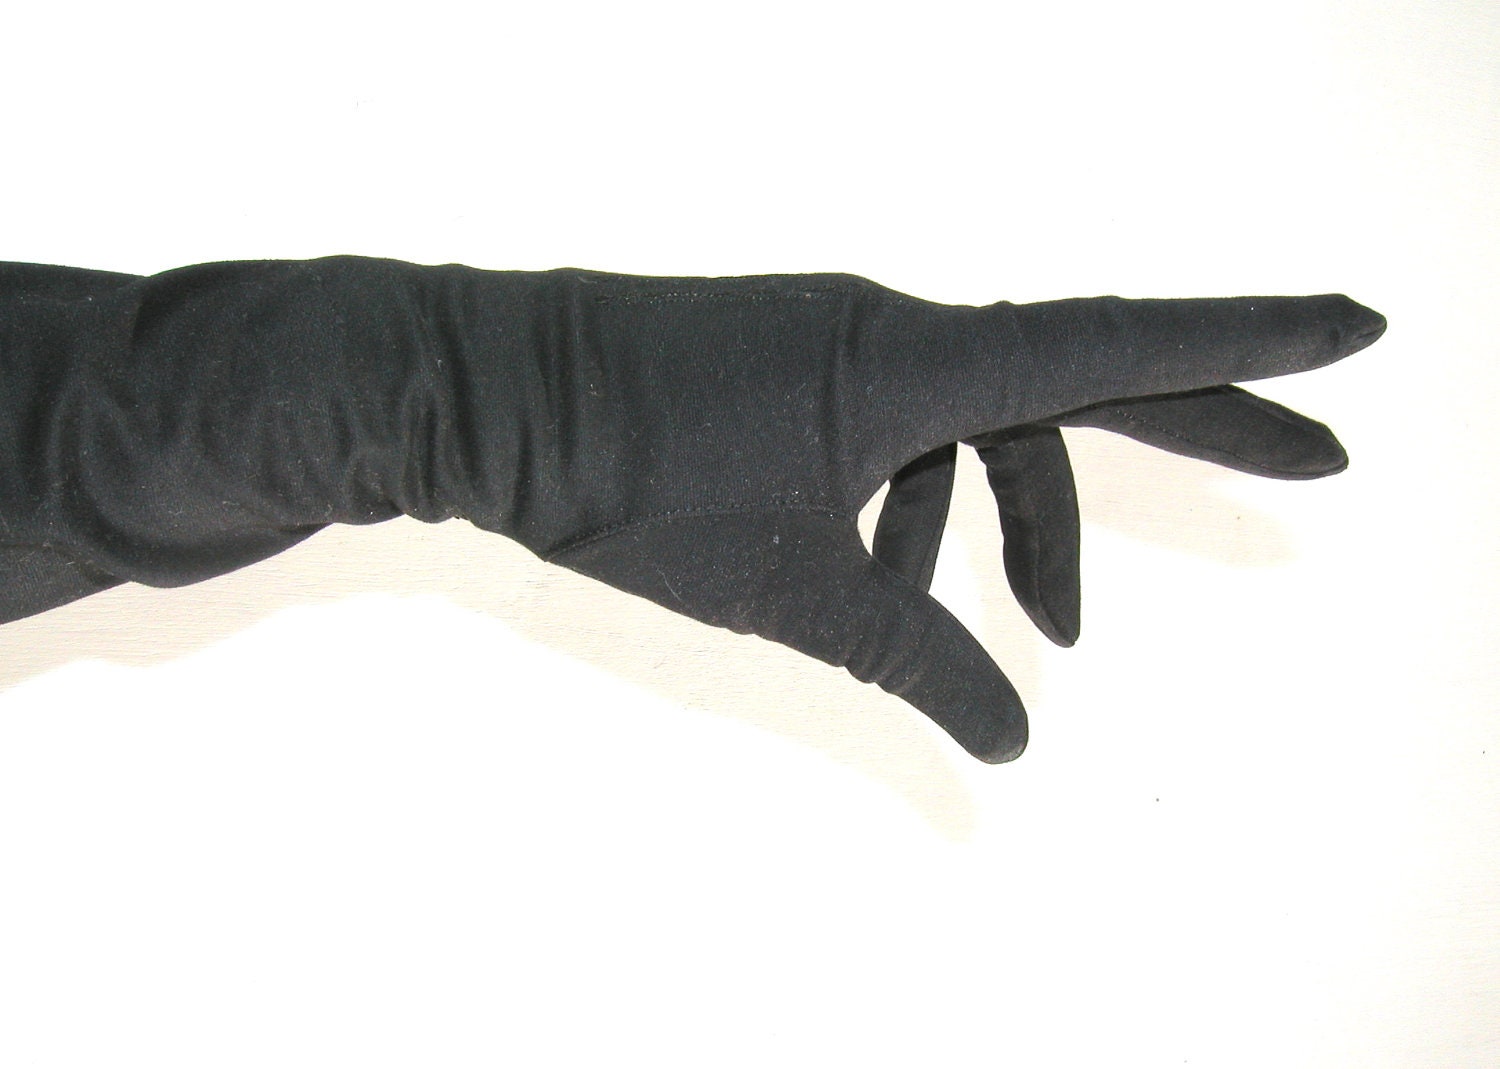 Pair of Black Gloves - MarysVintageLoved